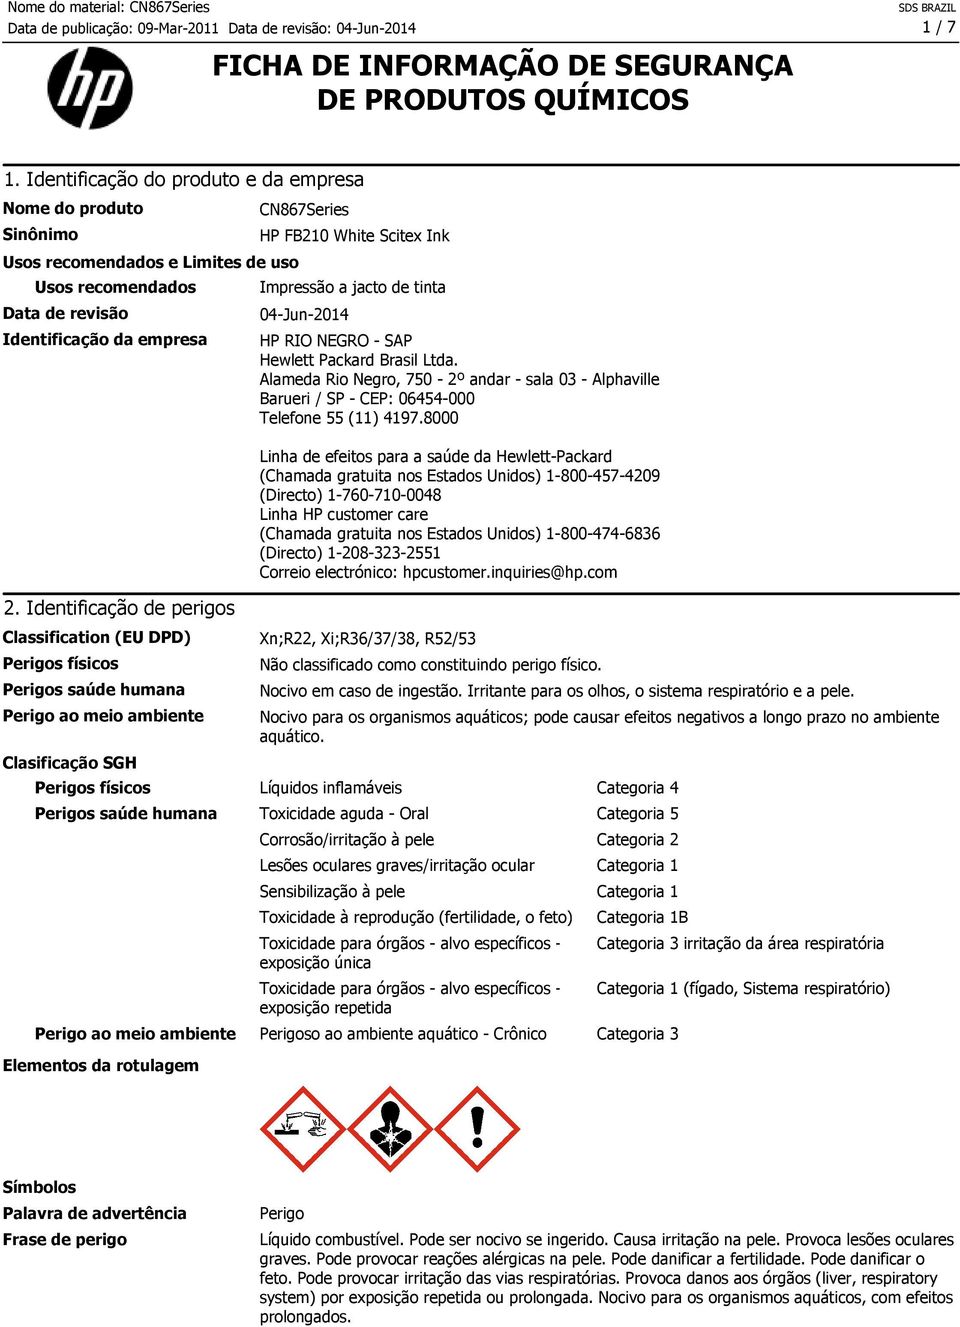 Identificação de perigos CN867Series HP FB210 White Scitex Ink Impressão a jacto de tinta 04-Jun-2014 HP RIO NEGRO - SAP Hewlett Packard Brasil Ltda.